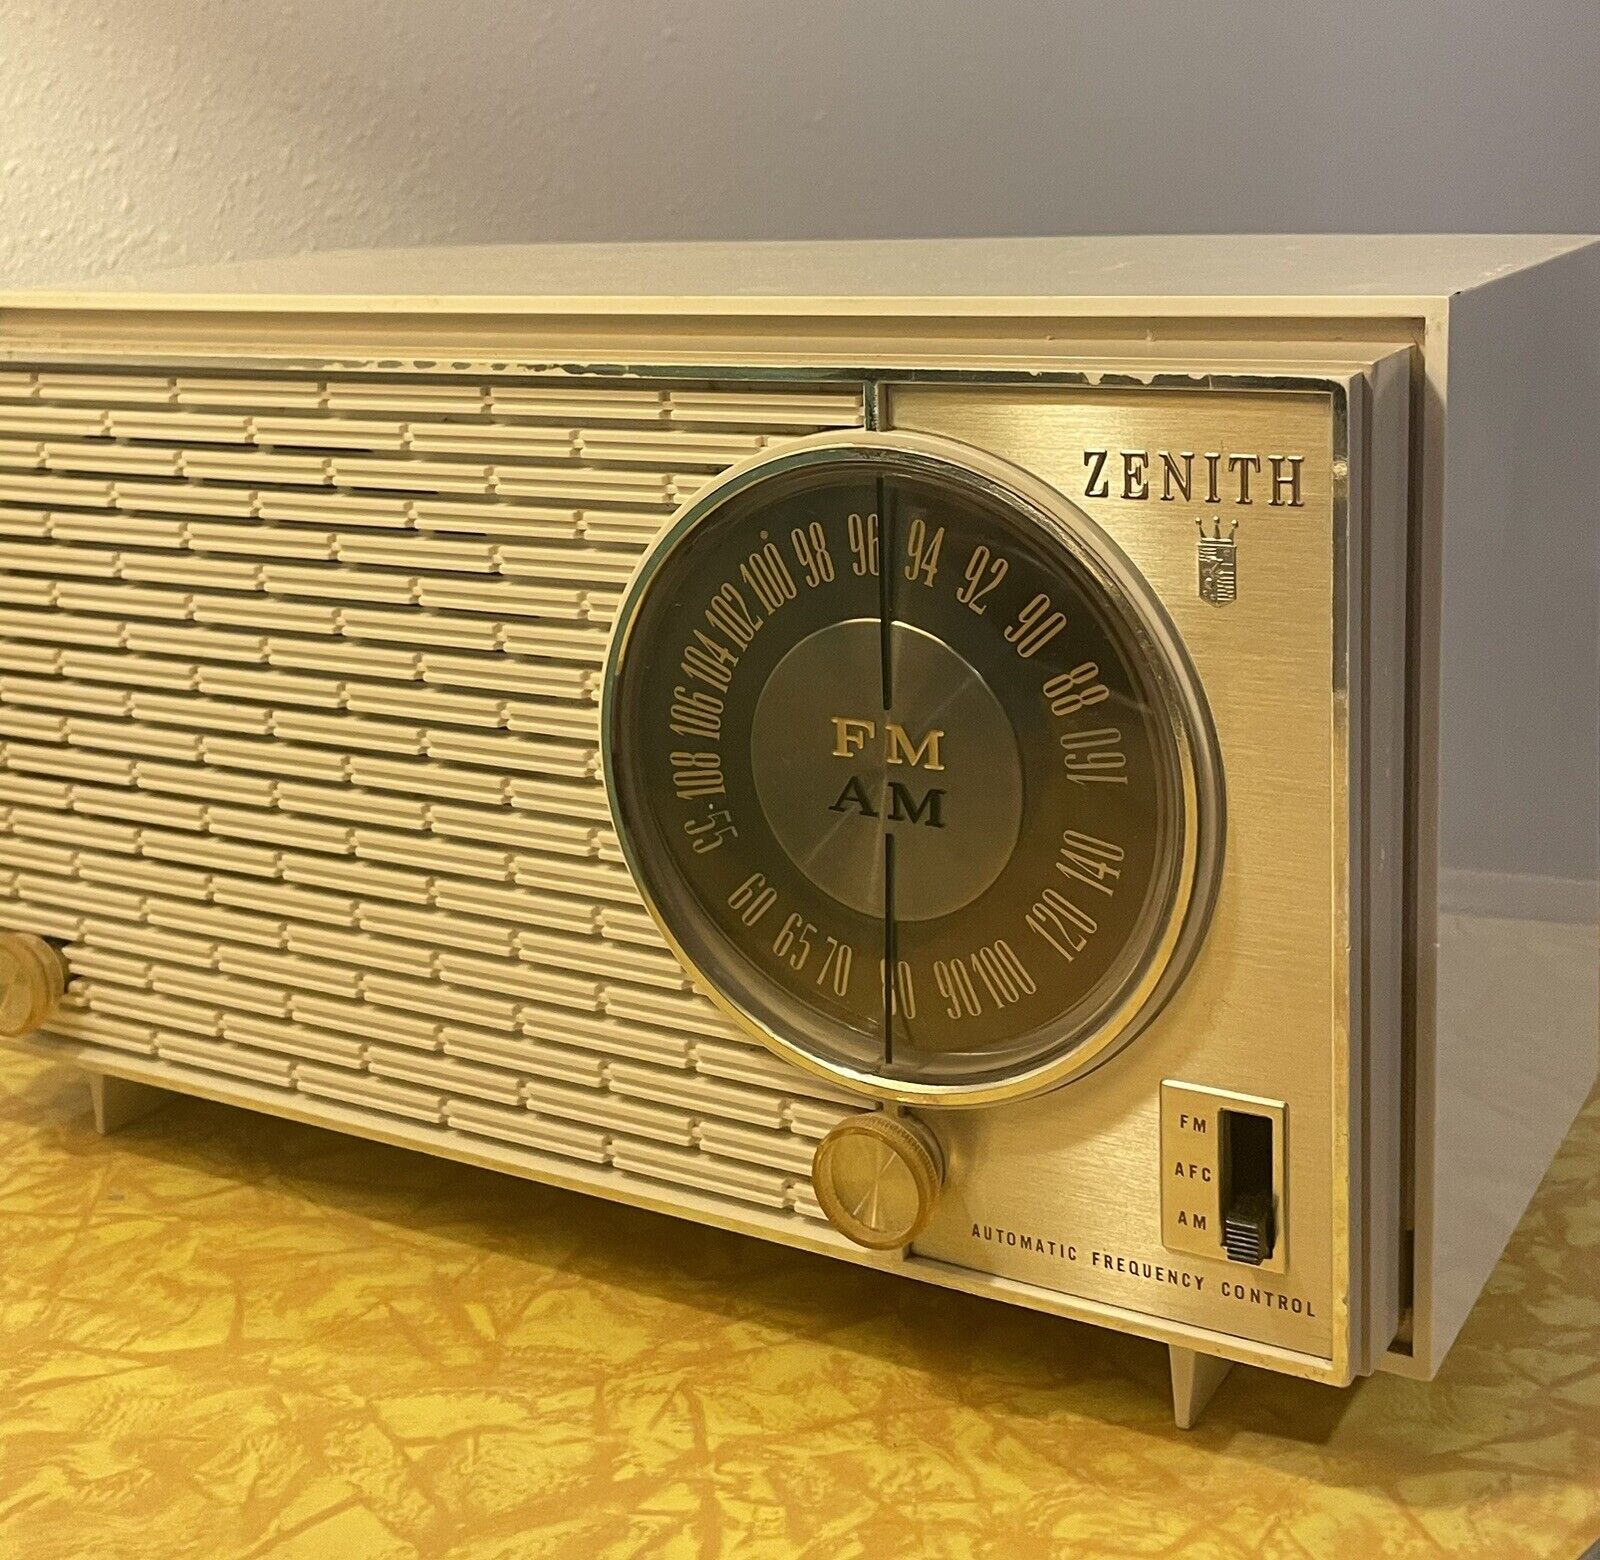 1959 Zenith Radio Tube, Am/Fm, Works Great Used